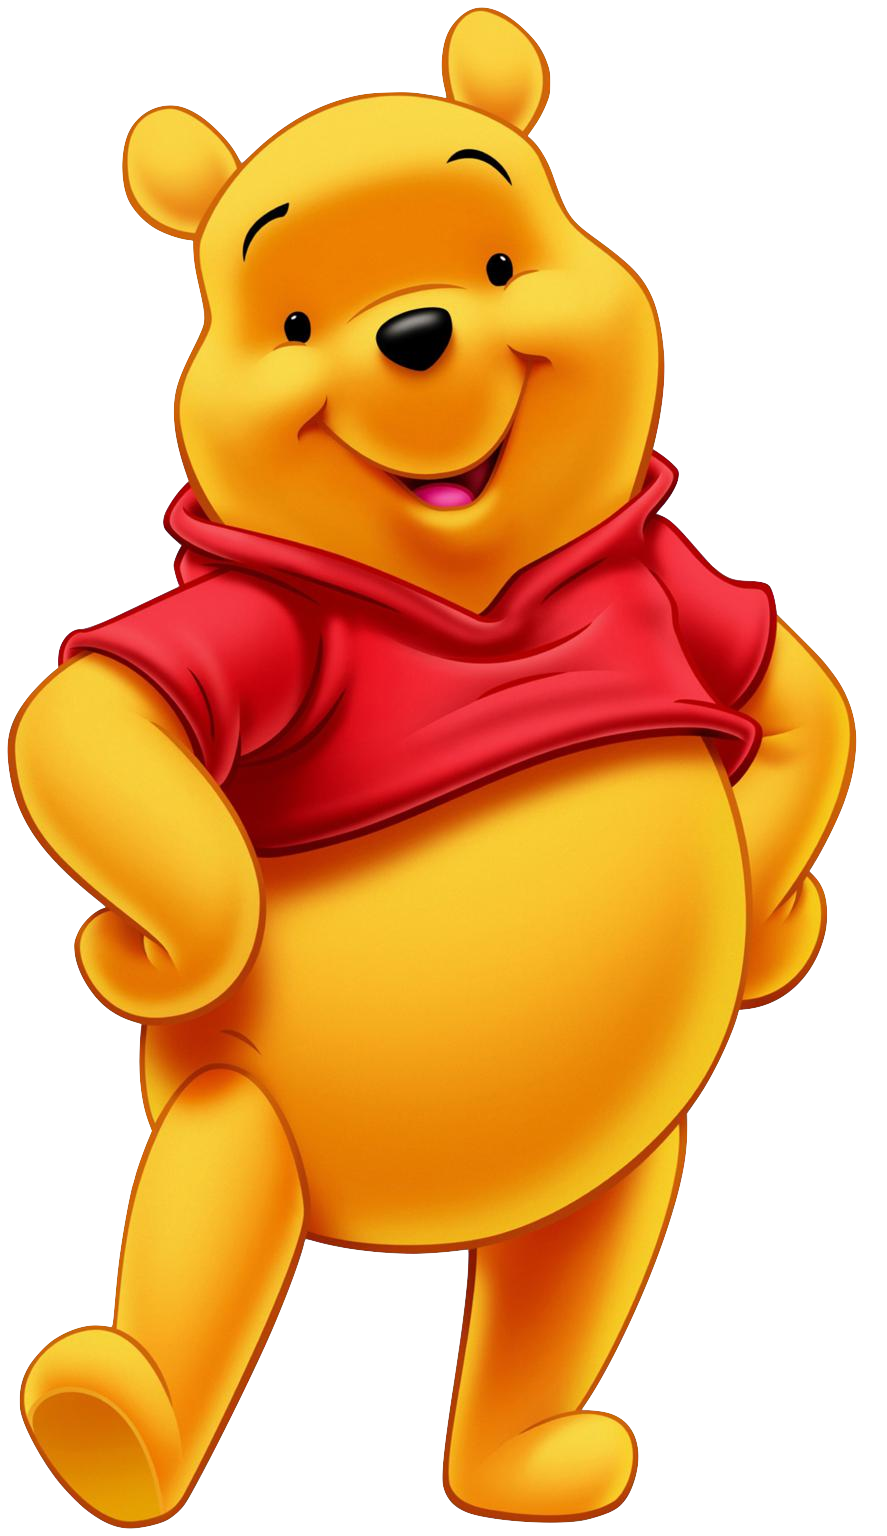 Winnie the Pooh (Disney), Pure Good Wiki